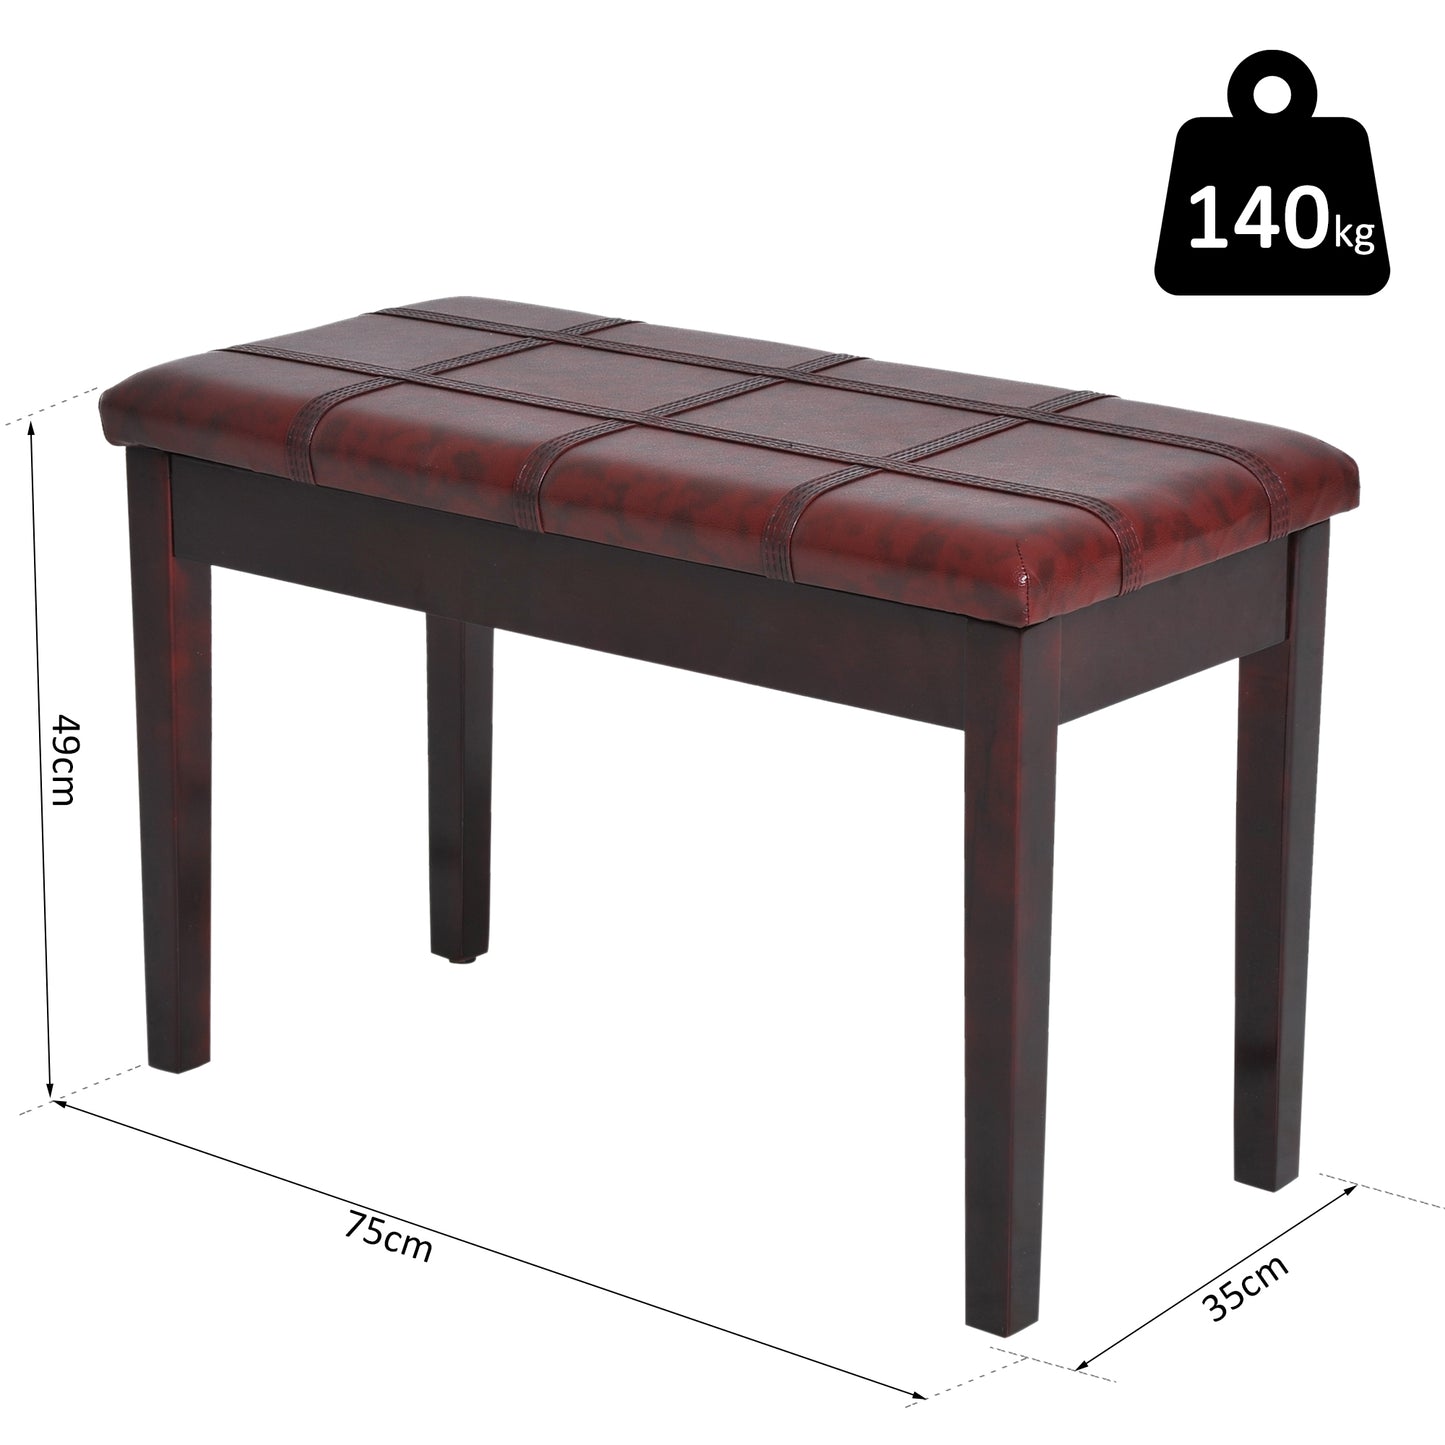 HOMCOM Piano Bench, PU Leather, 75Lx35Wx49H cm-Wine Red